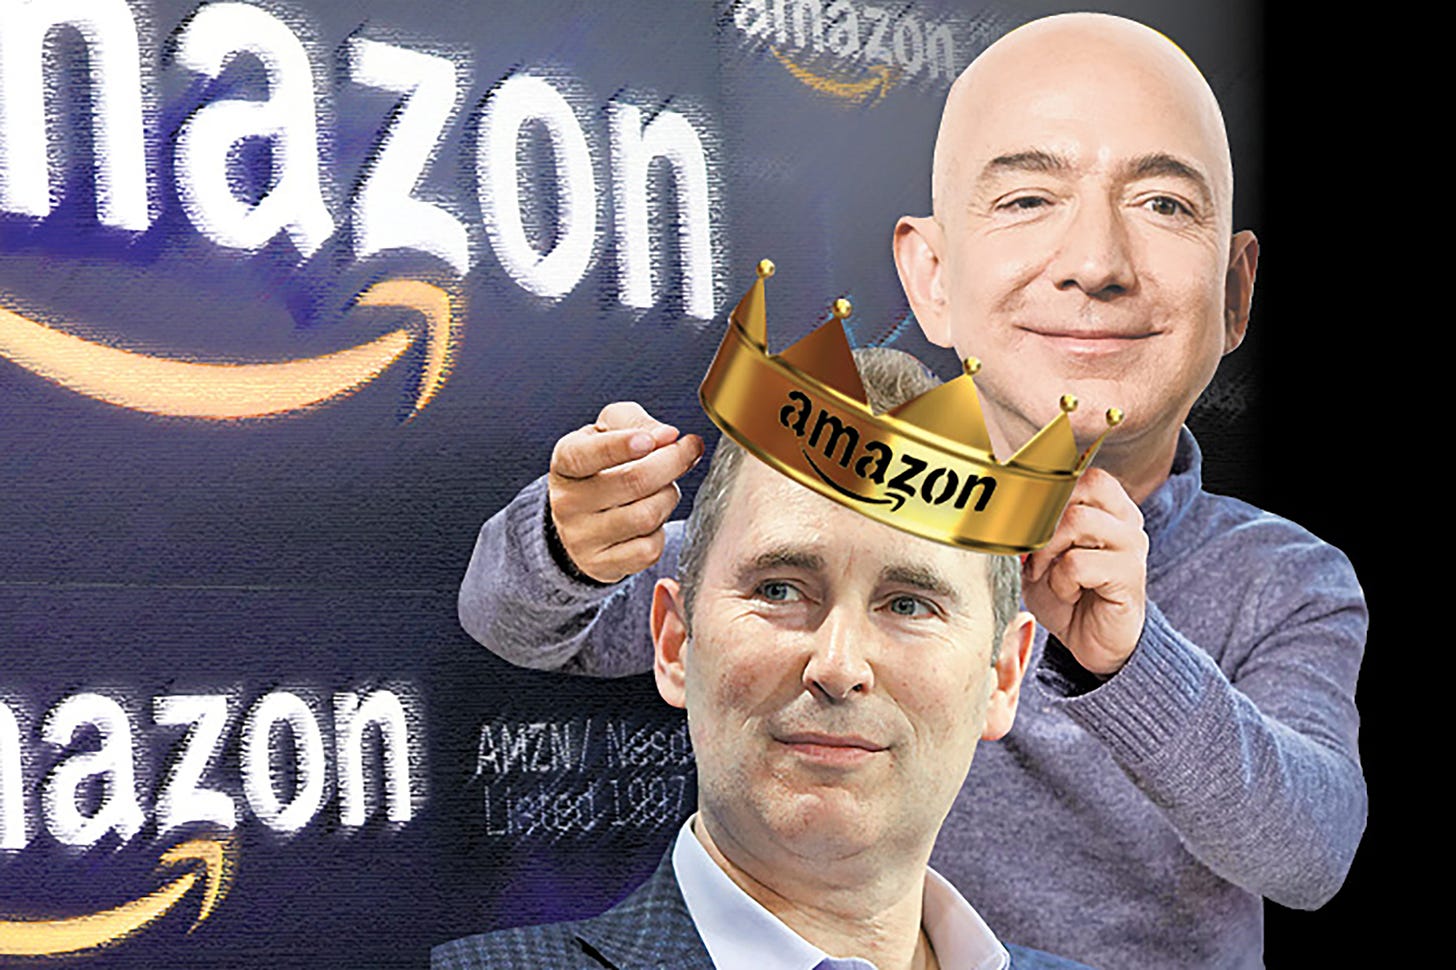 Jeff Bezos stepping down as Amazon CEO